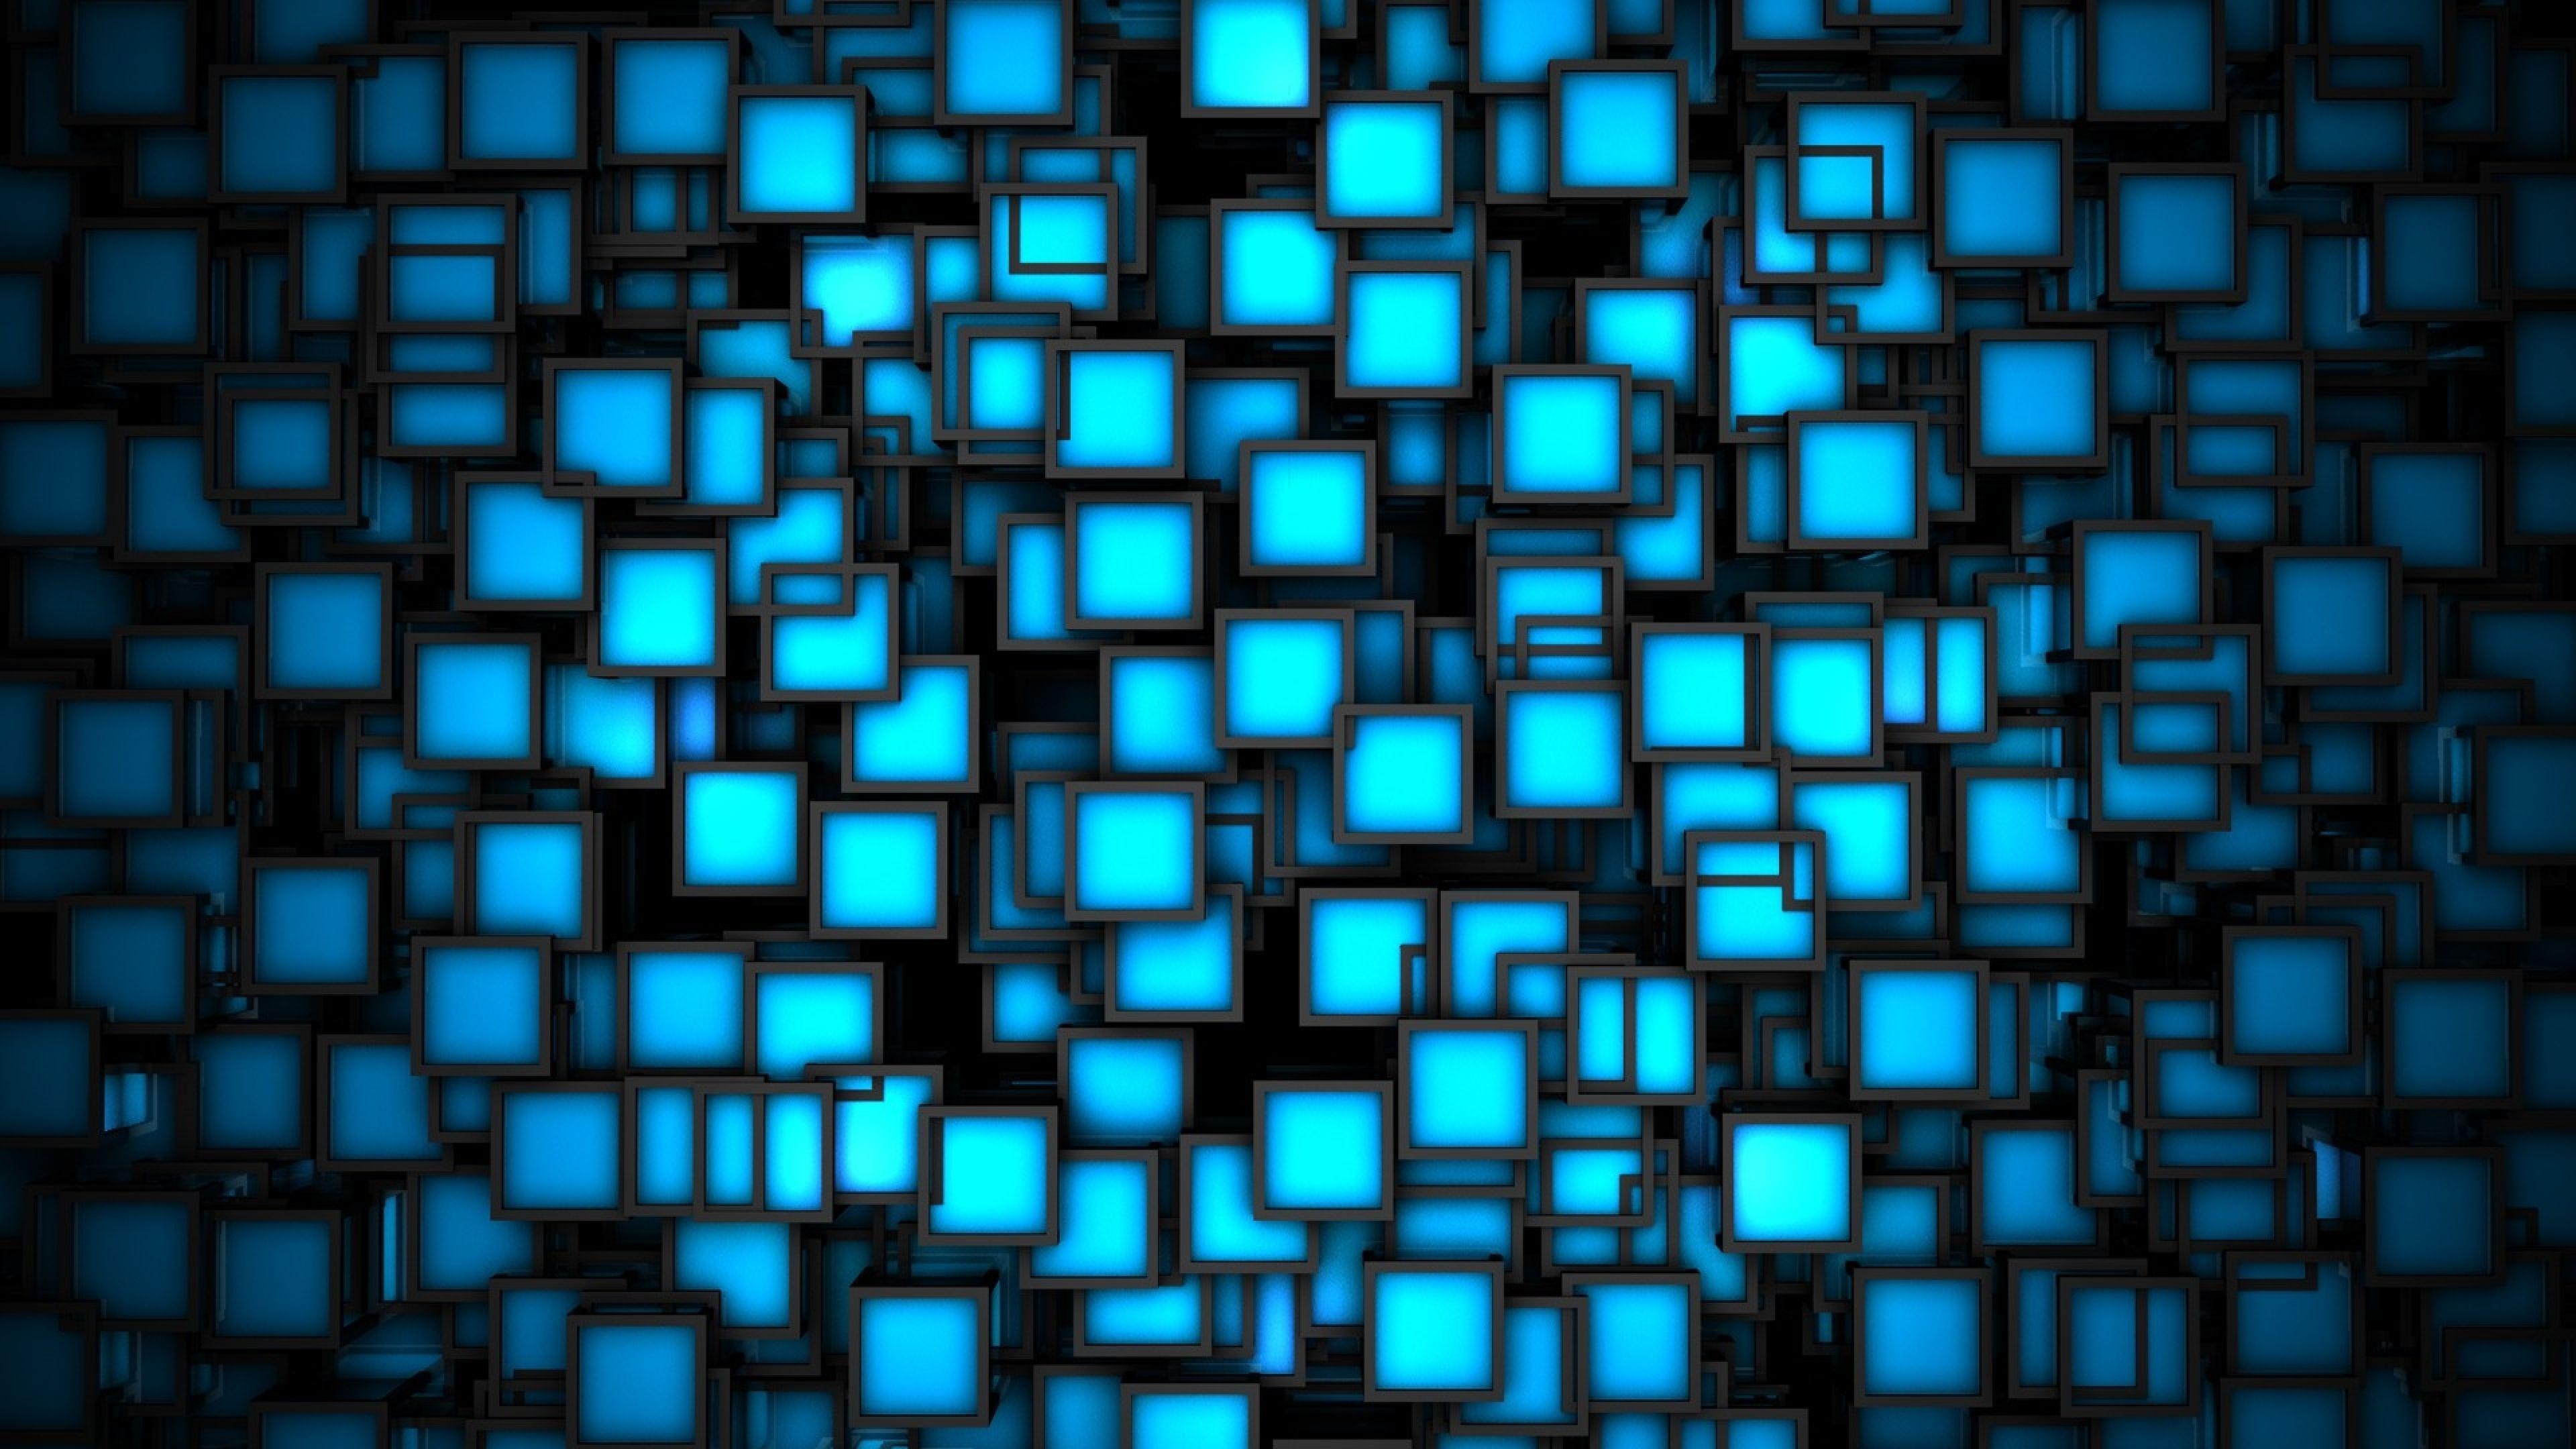 Download Wallpaper 3840x2160 Black, Blue, Bright, Squares 4K Ultra